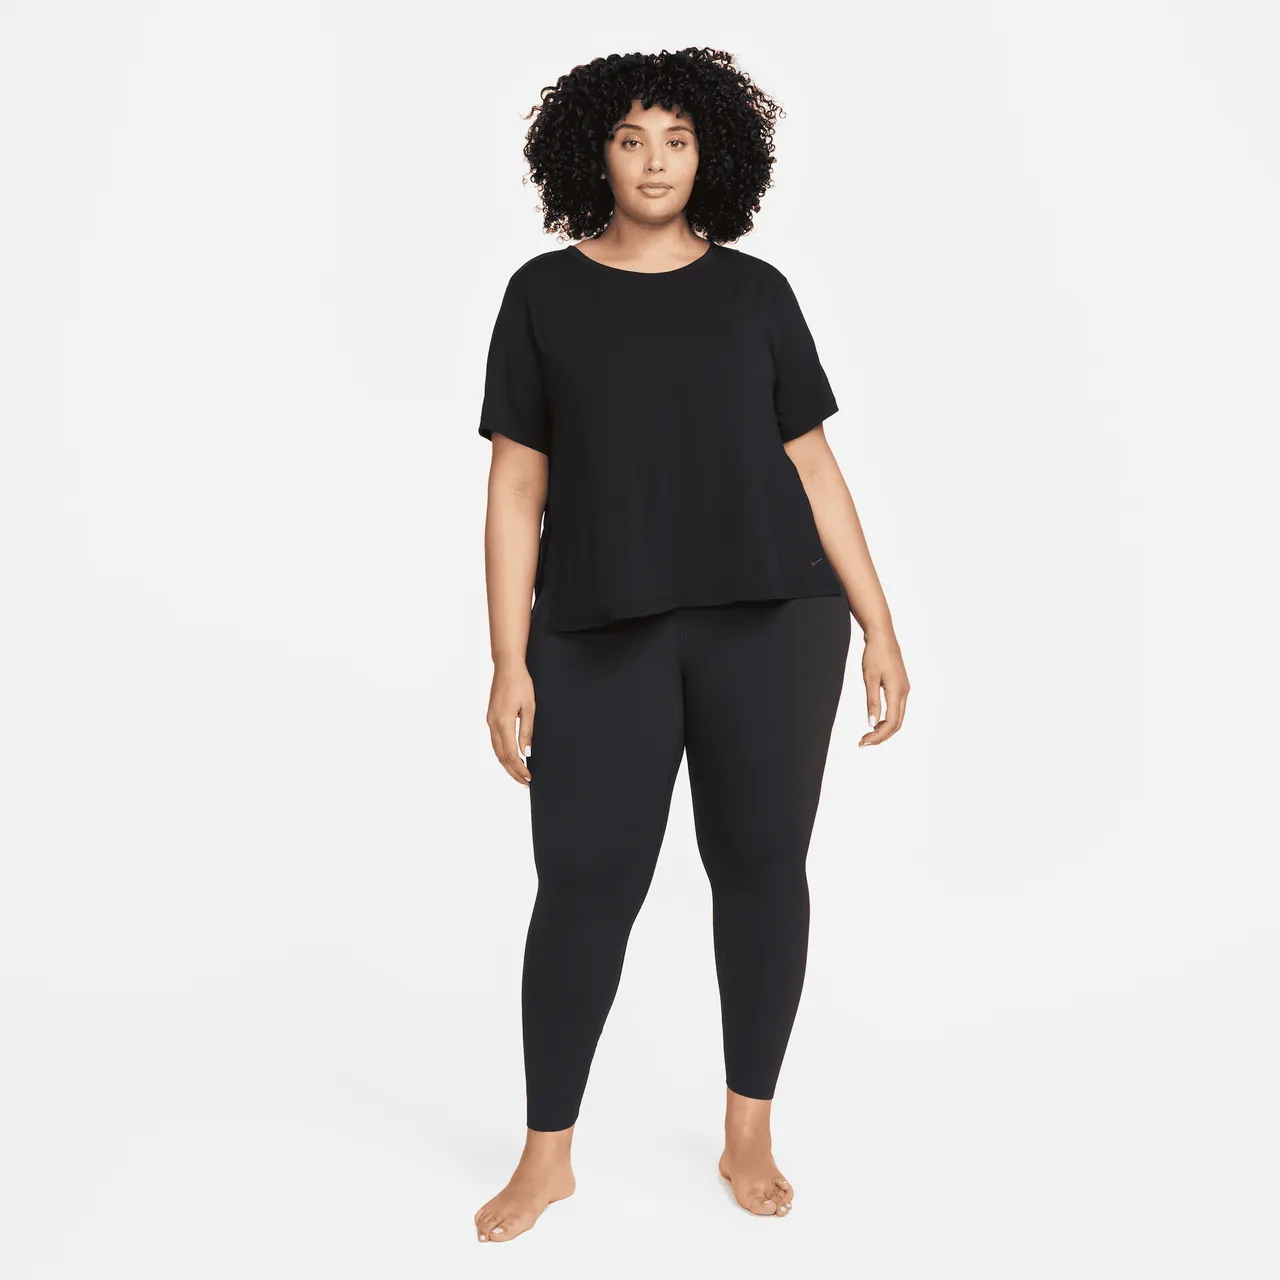 Nike Yoga Dri-FIT Women's Top - Black - Polyester